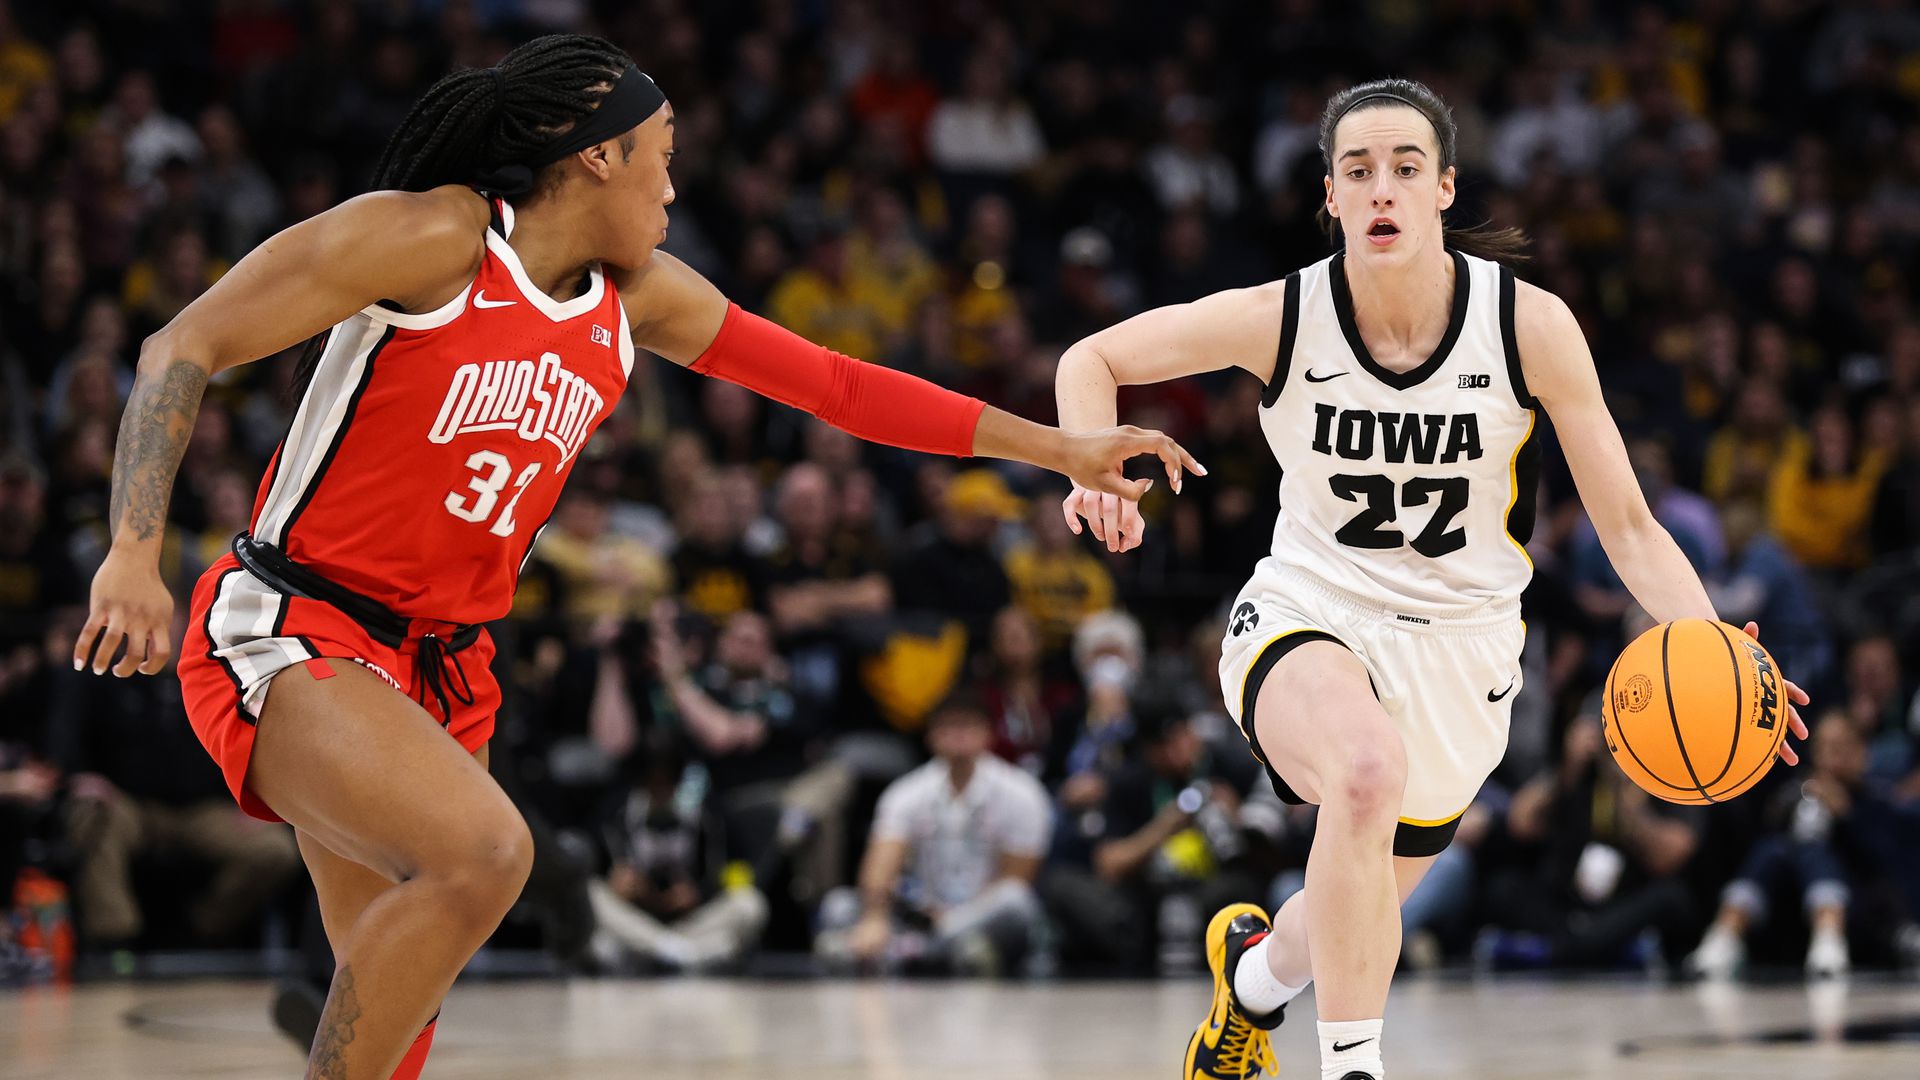 game preview: no. 18 ohio state women’s basketball vs. no. 2 iowa